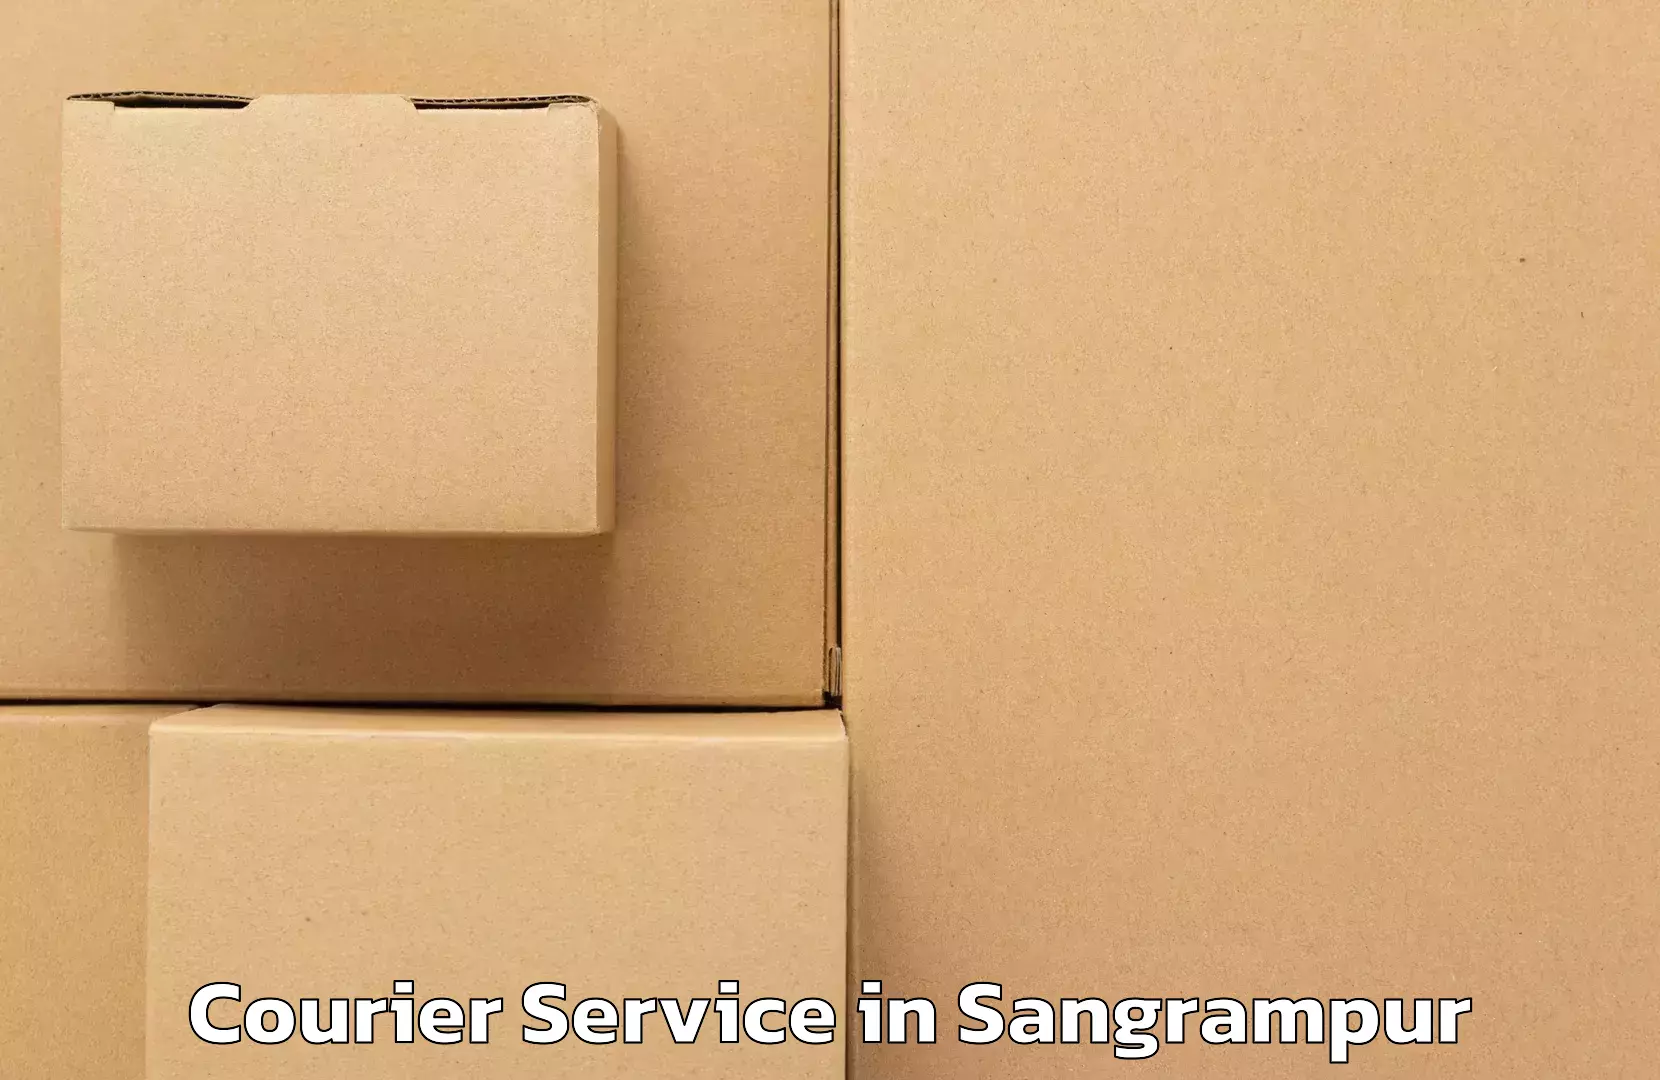 Bulk shipment in Sangrampur